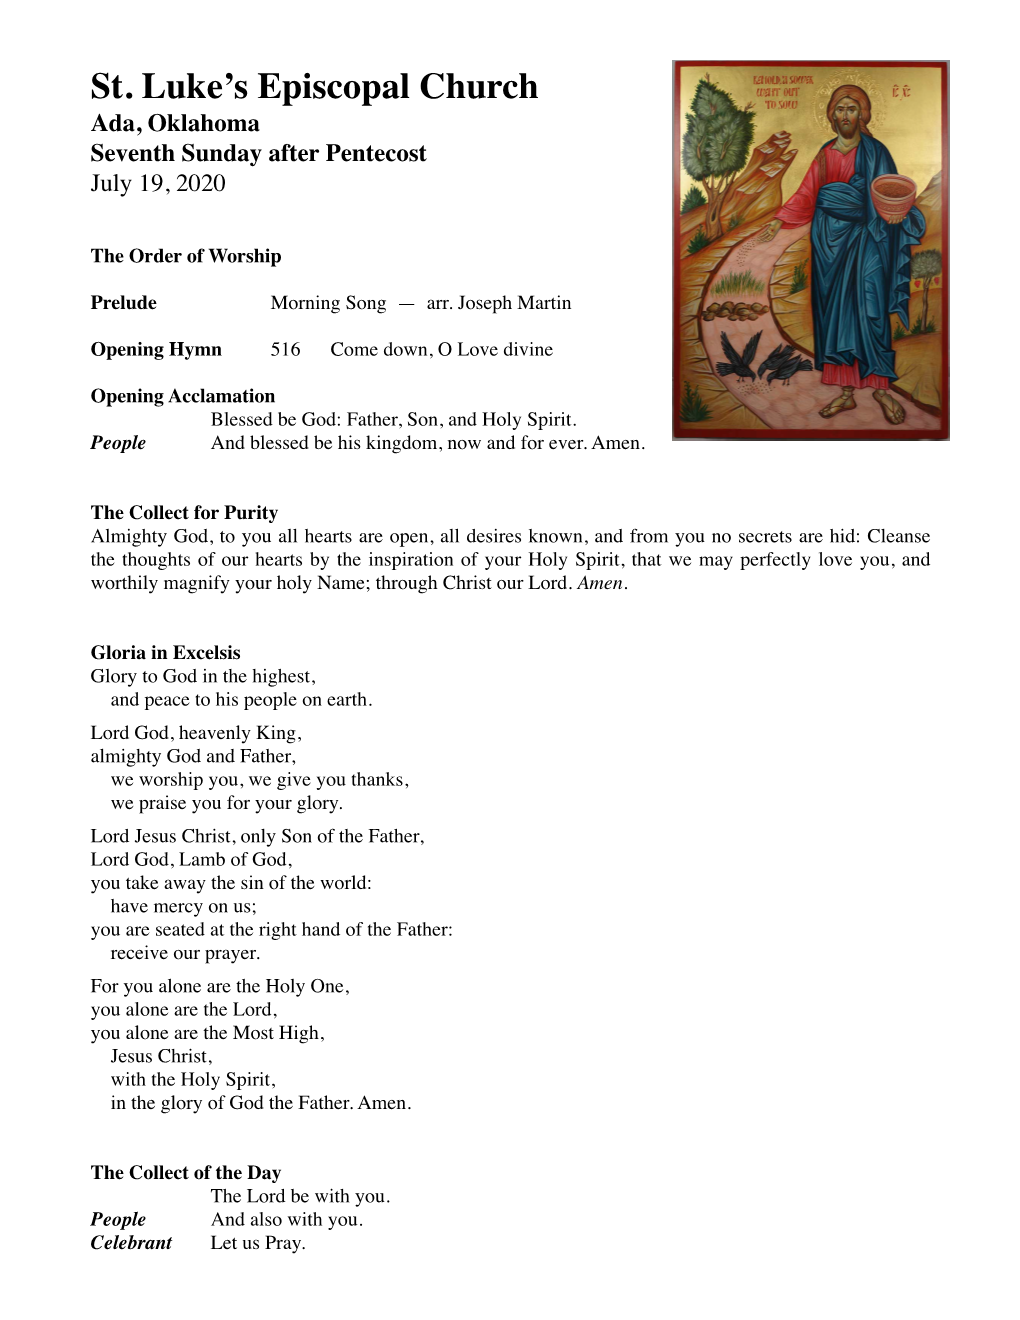 PDF-7Th Sunday After Pentecost